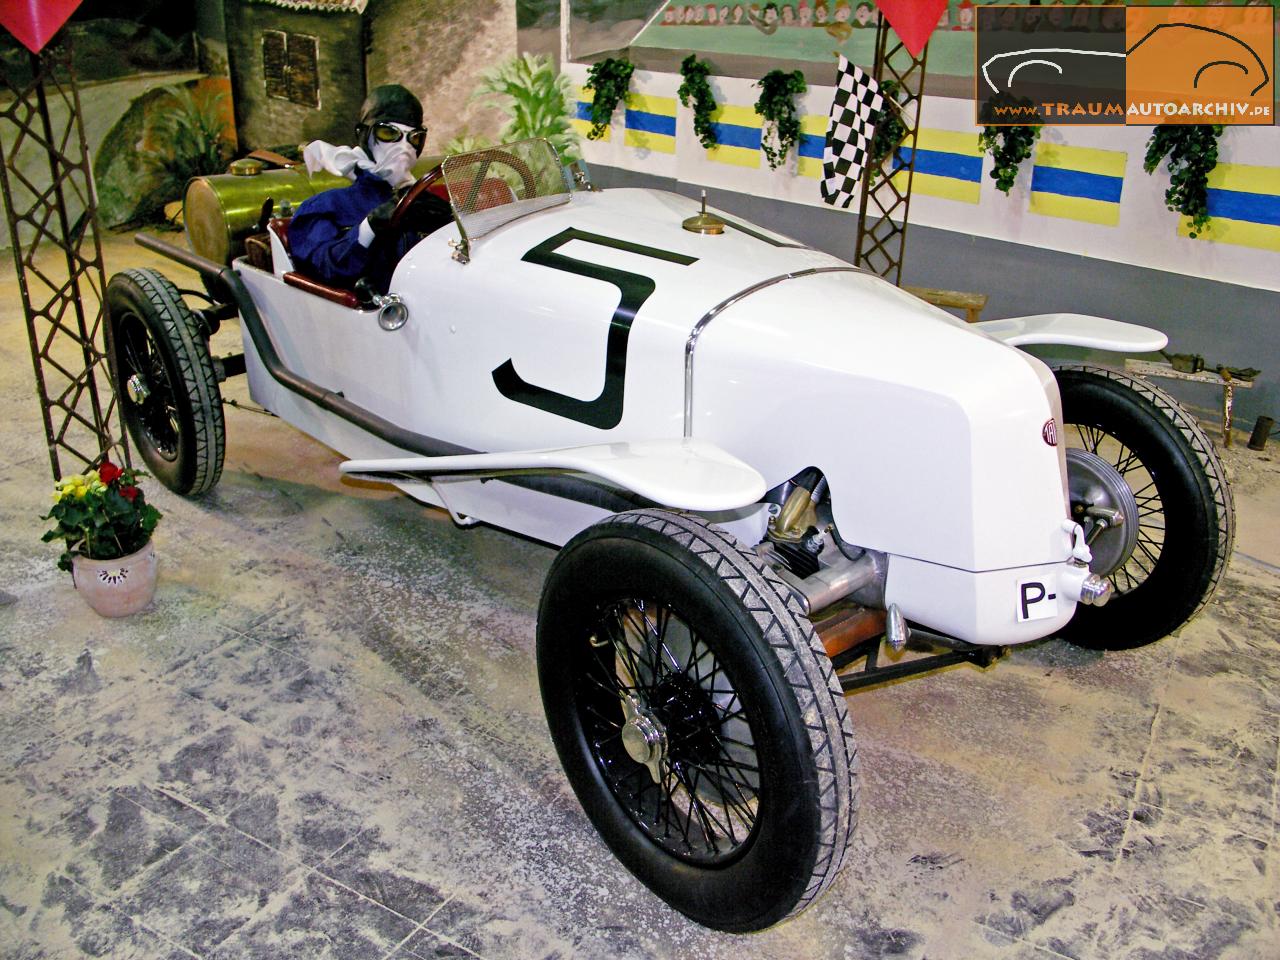 Tatra Targa Florio '1928 (3).jpg 227.2K